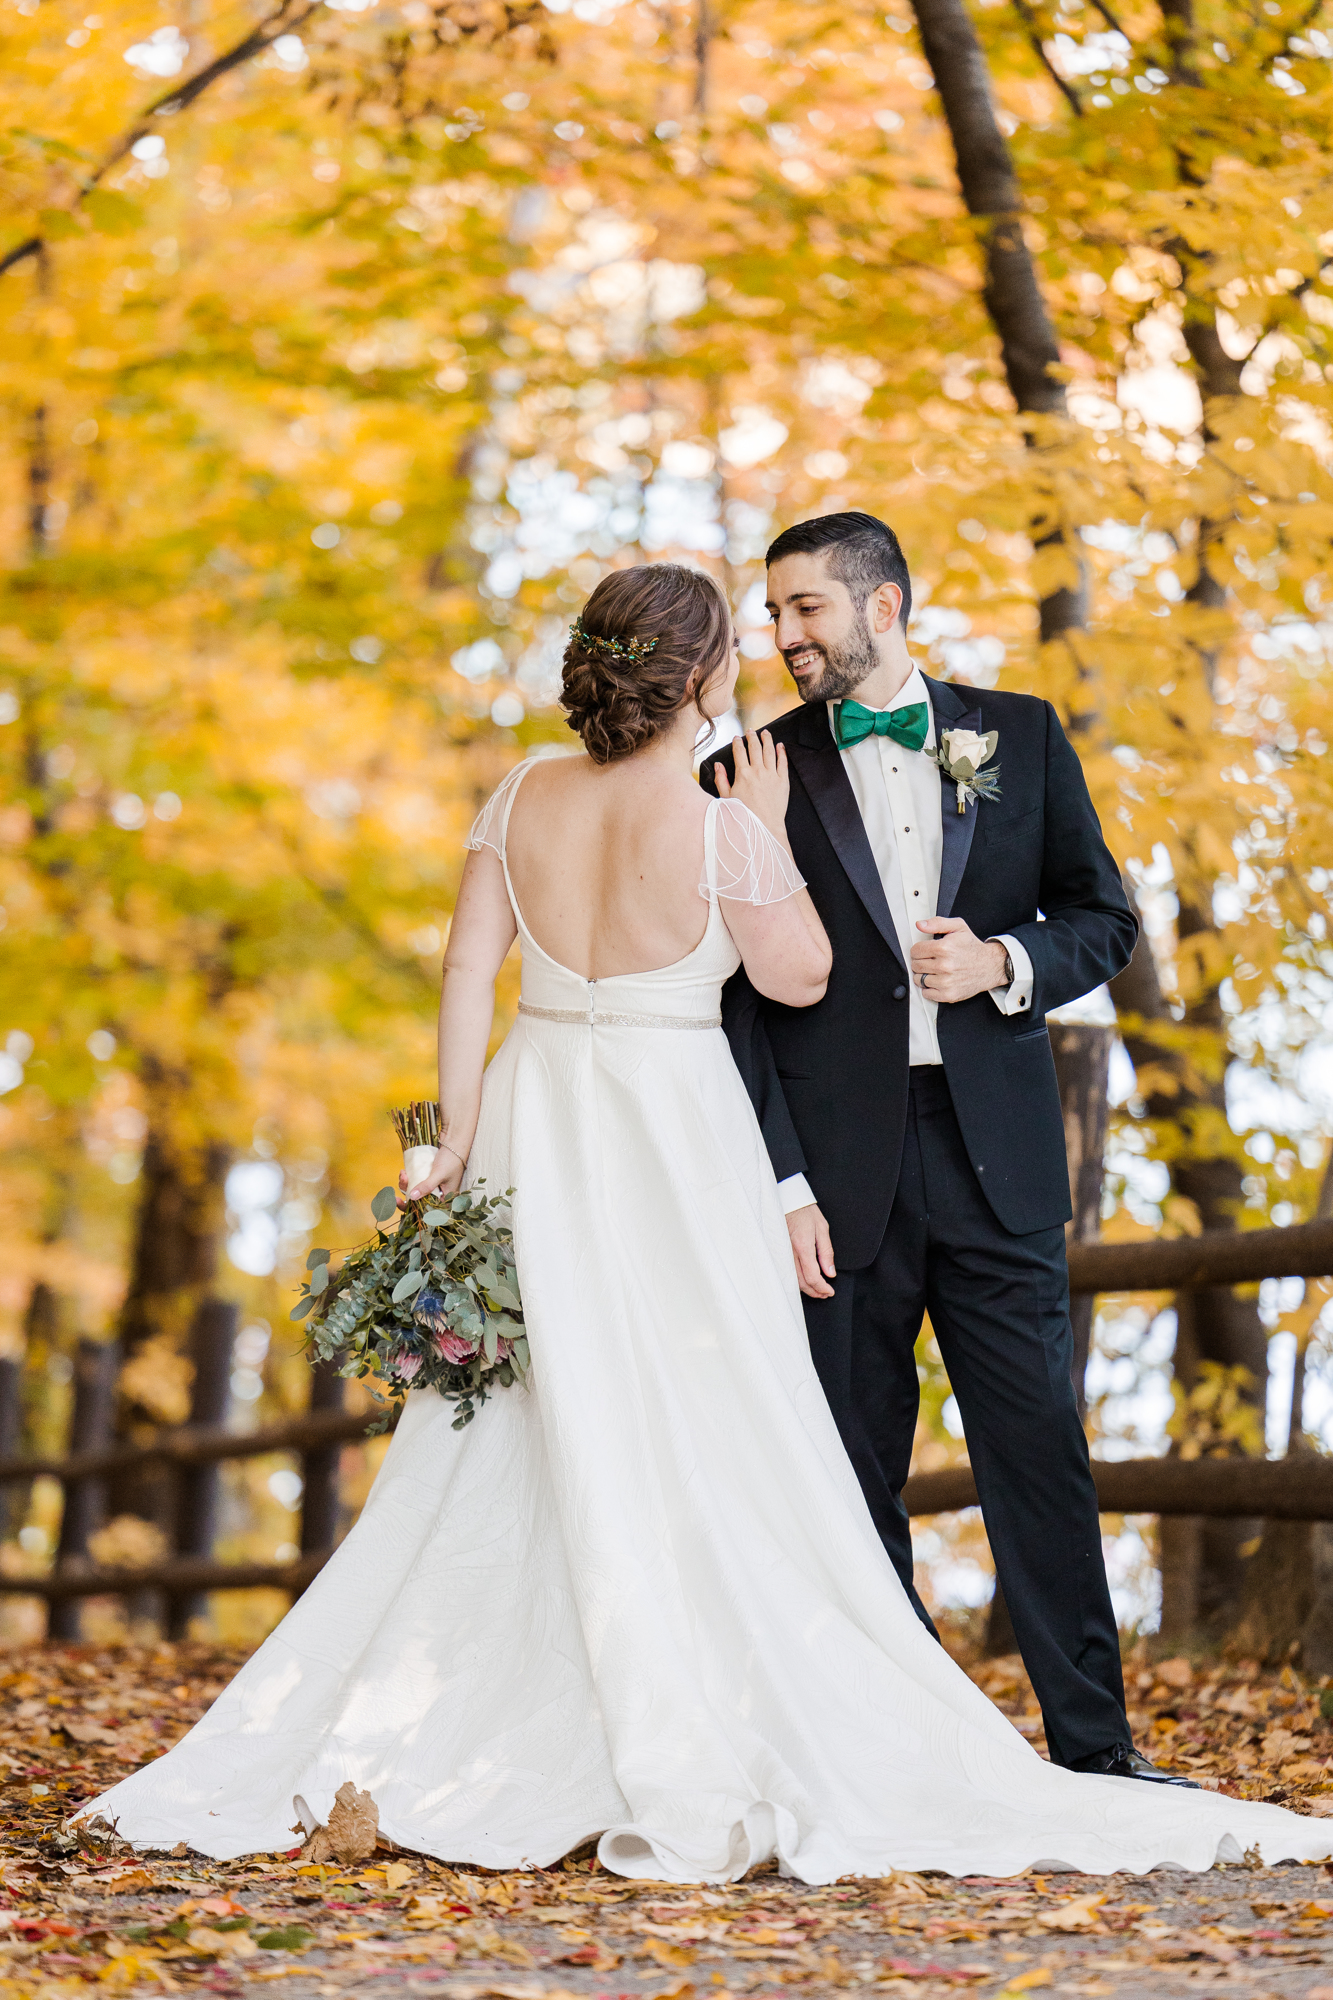 Amazing Gate House Wedding in Fall